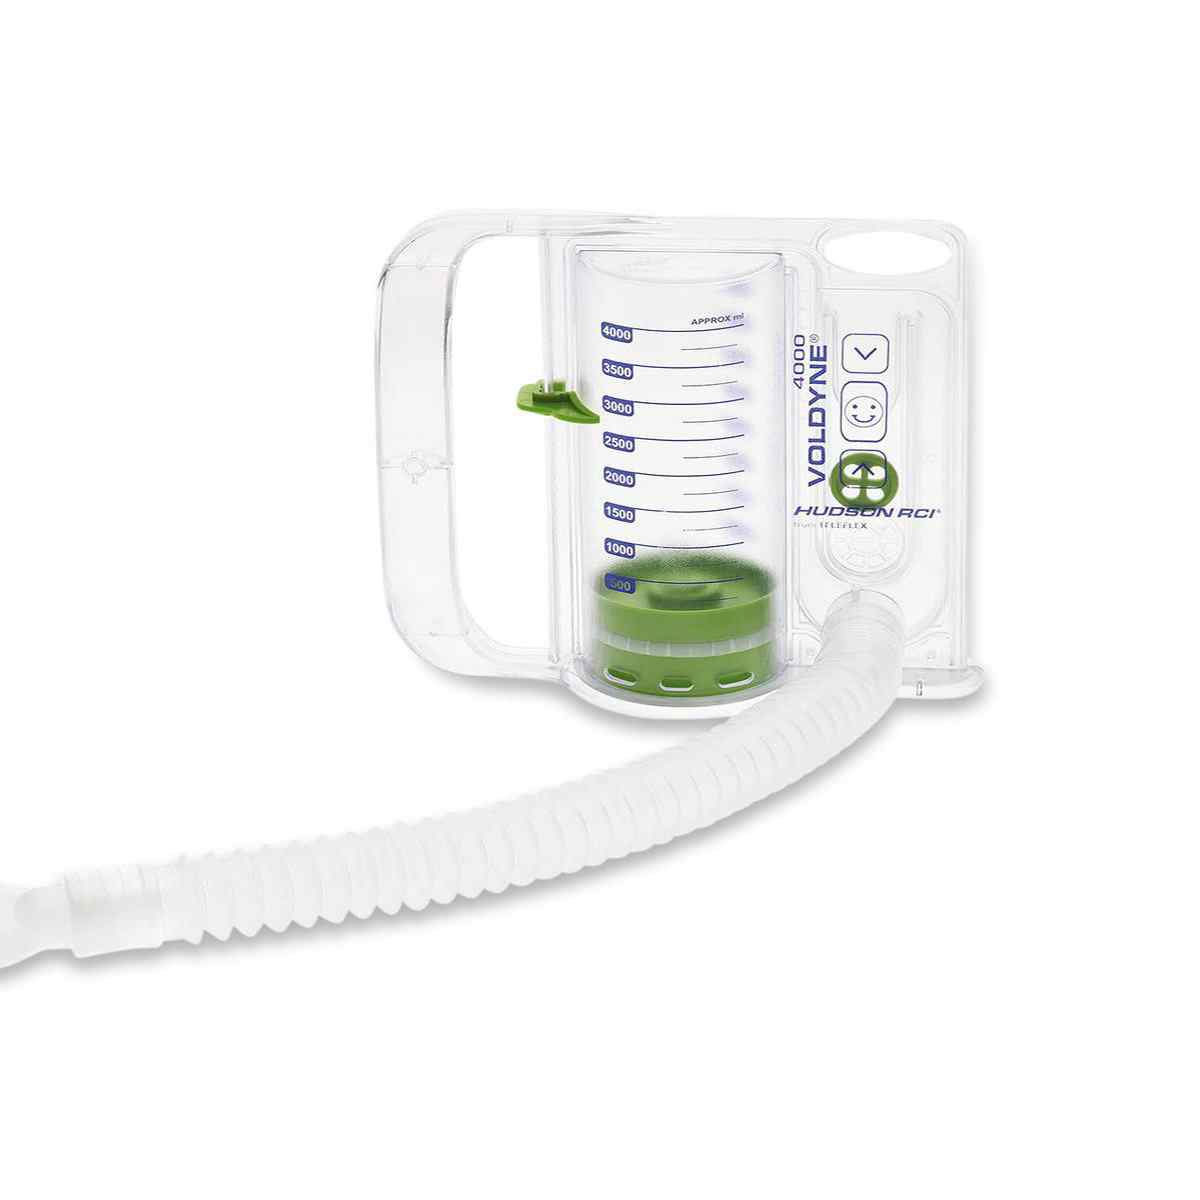 Medline Voldyne Incentive Spirometer, 4000 mL